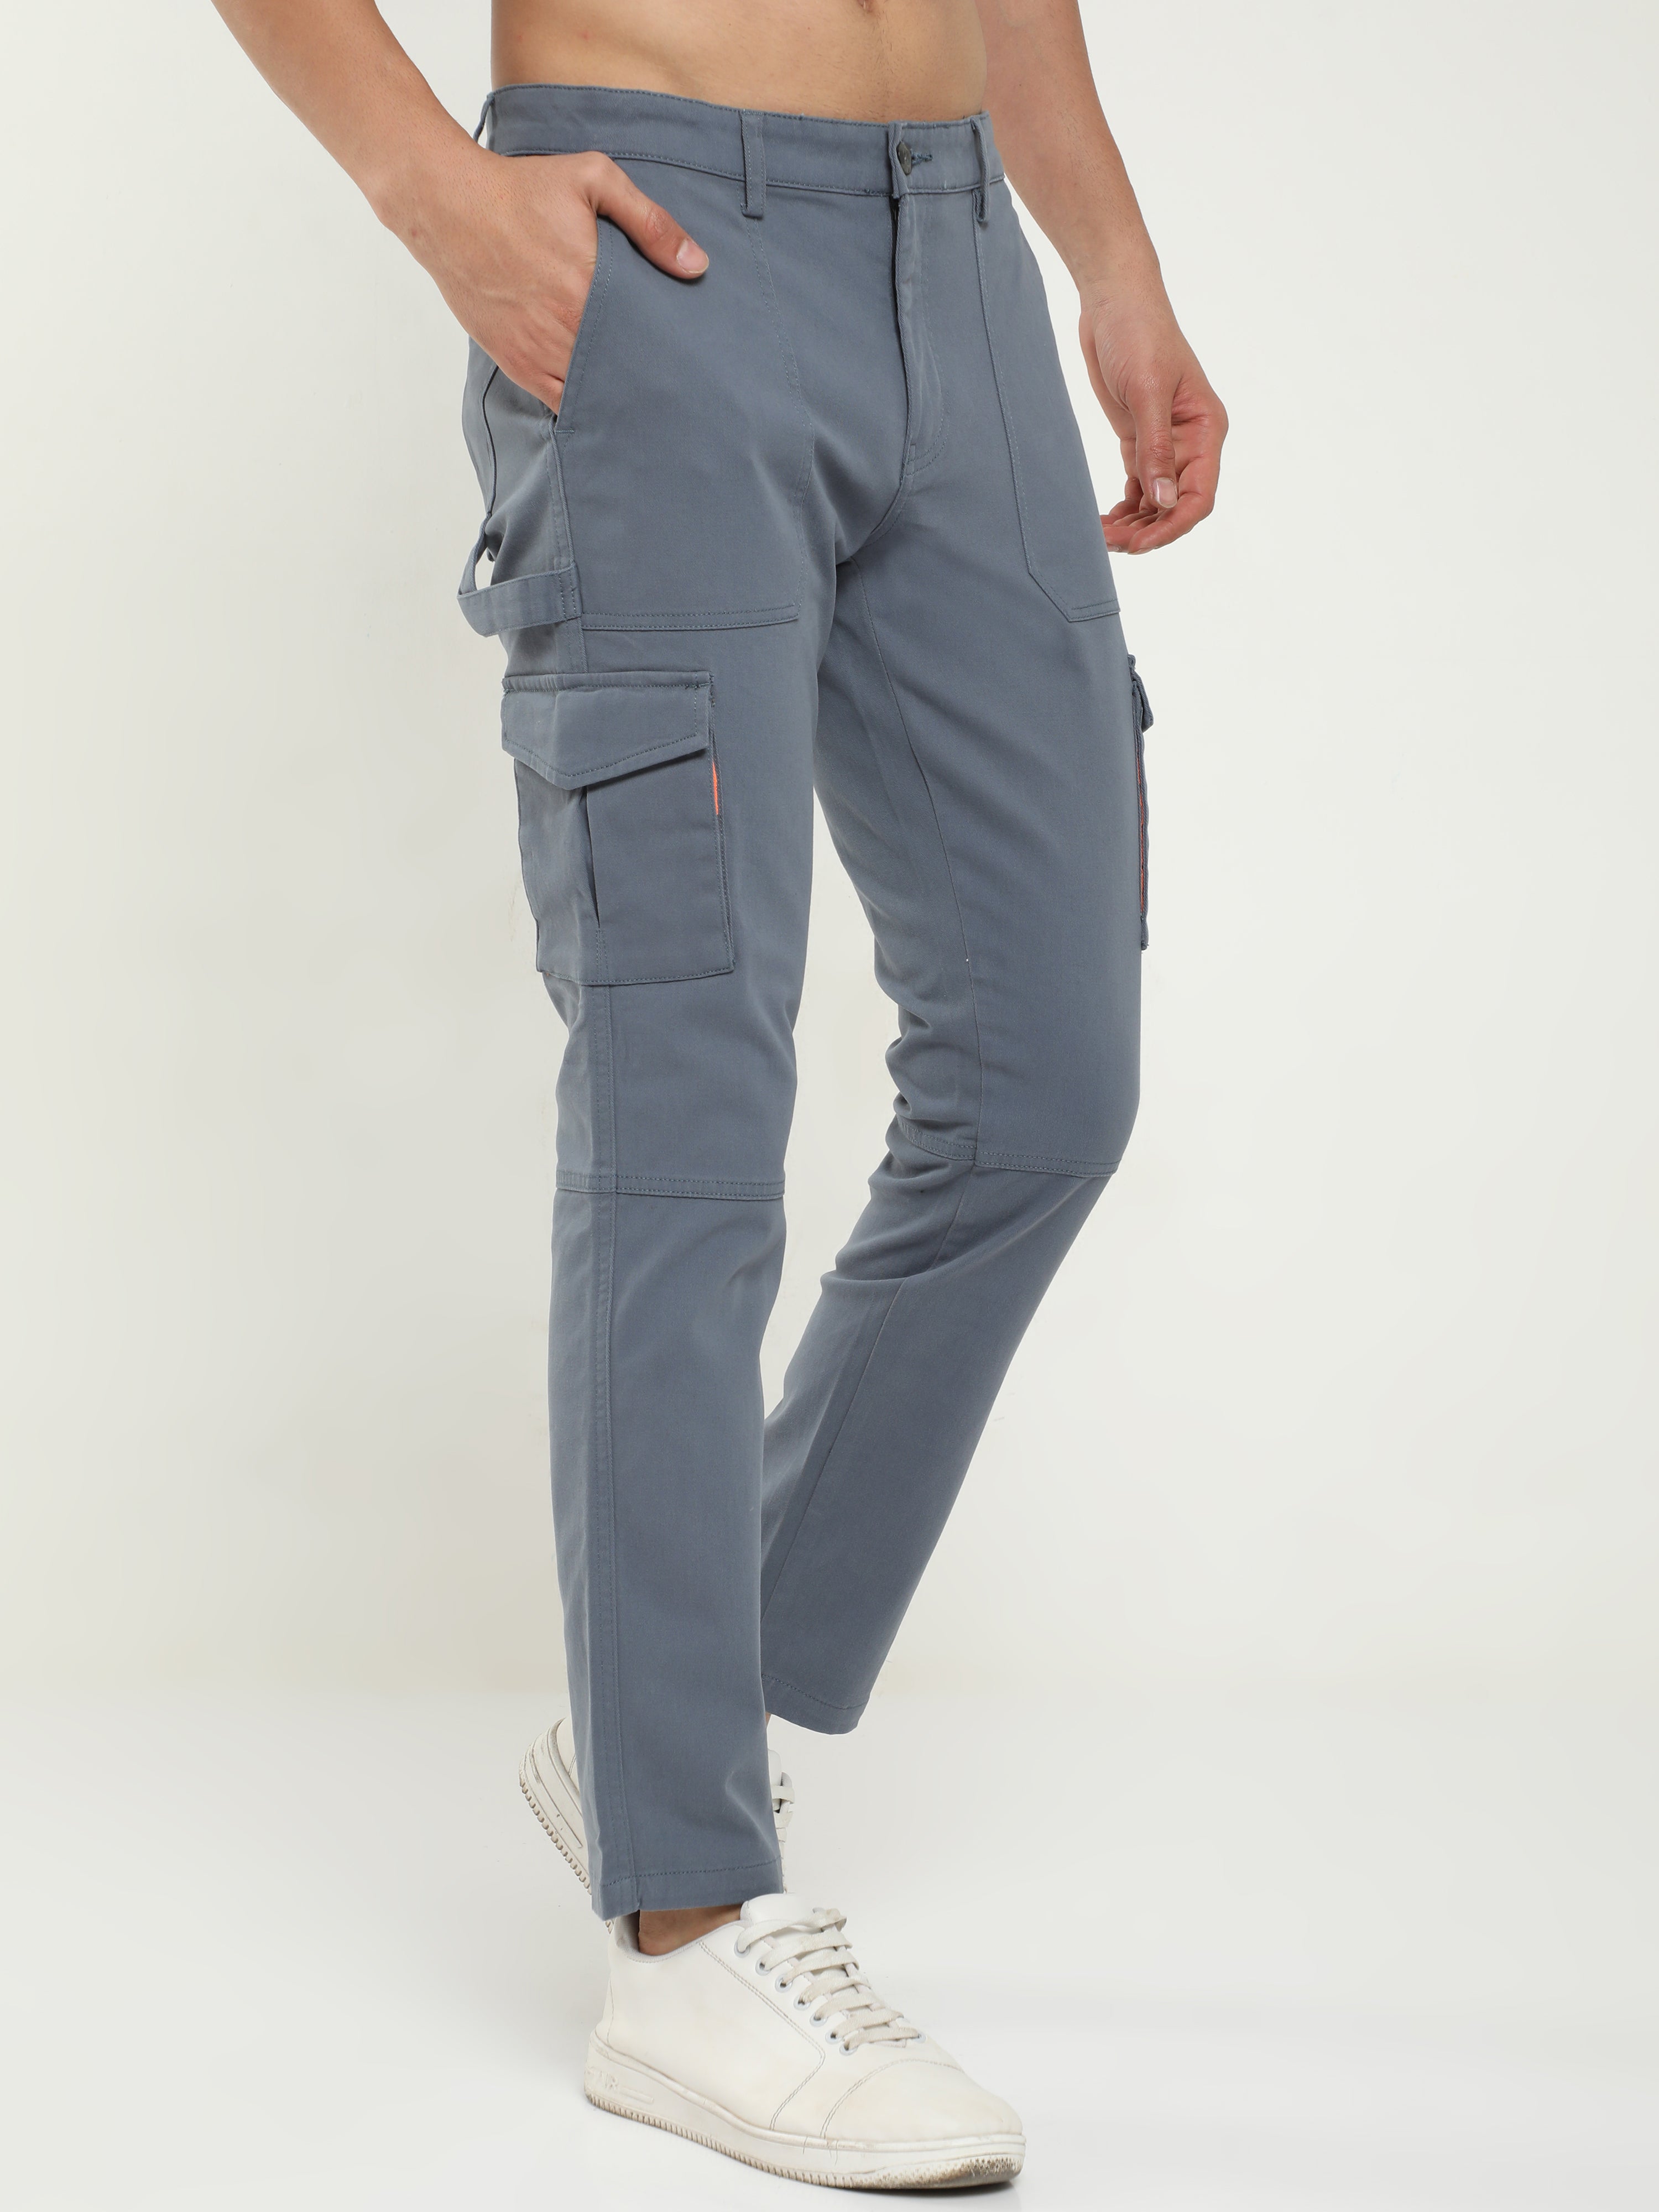 Jeans & Pants | HIGHLANDER GREY CARGO PANTS FOR MEN. | Freeup